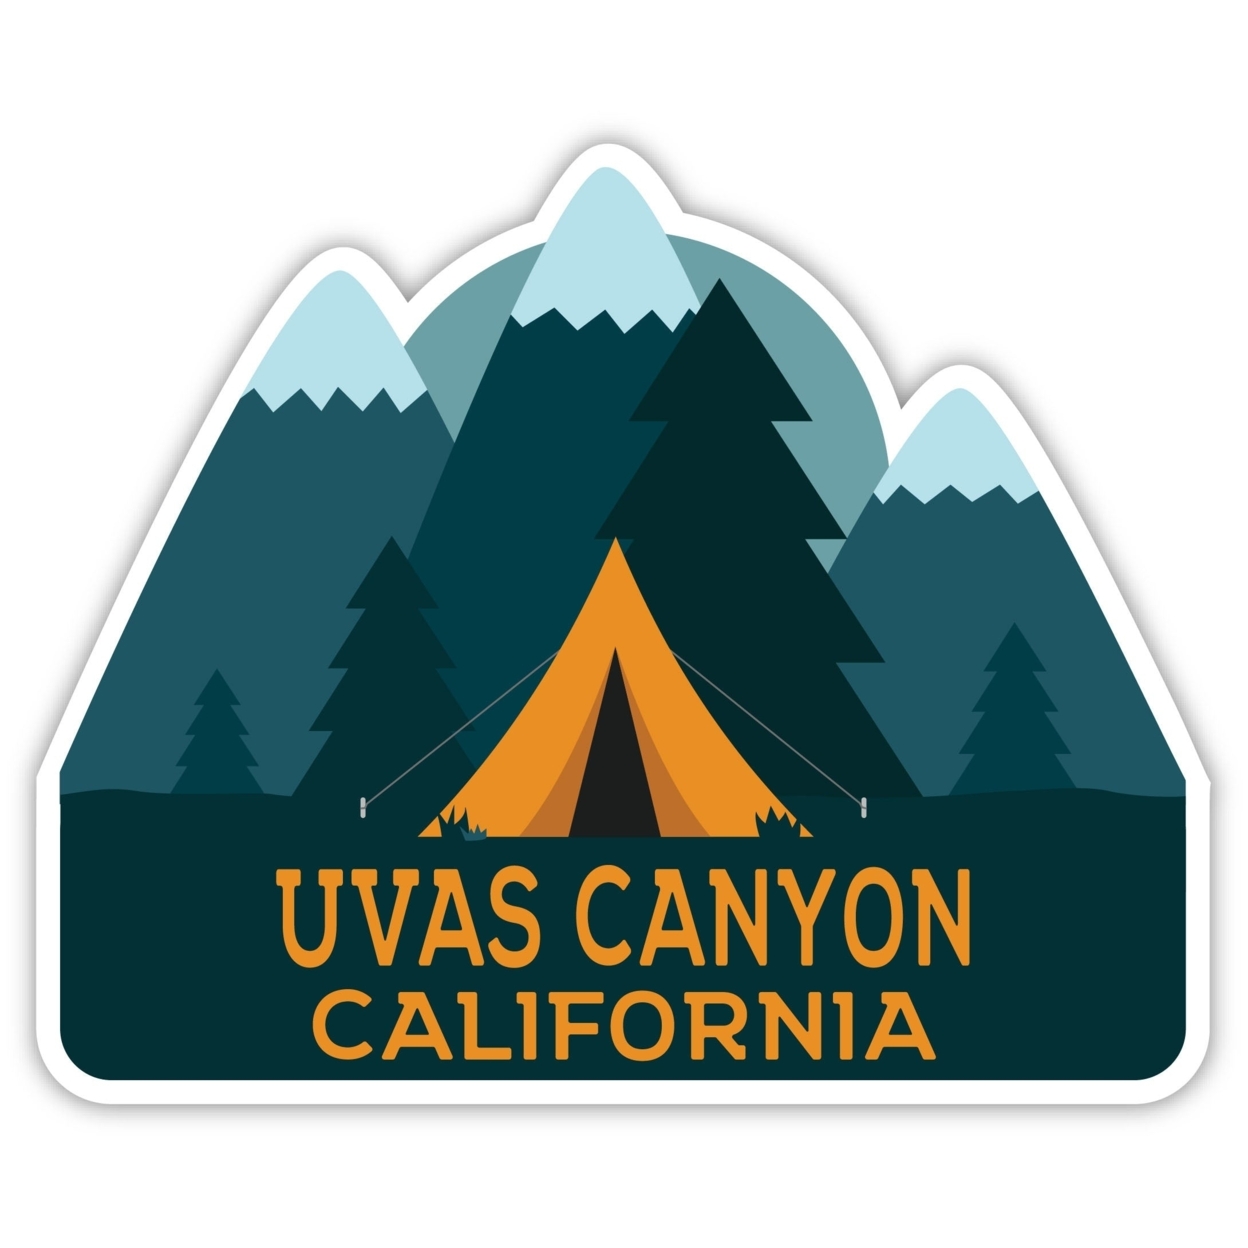 Uvas Canyon California Souvenir Decorative Stickers (Choose Theme And Size) - Single Unit, 2-Inch, Tent